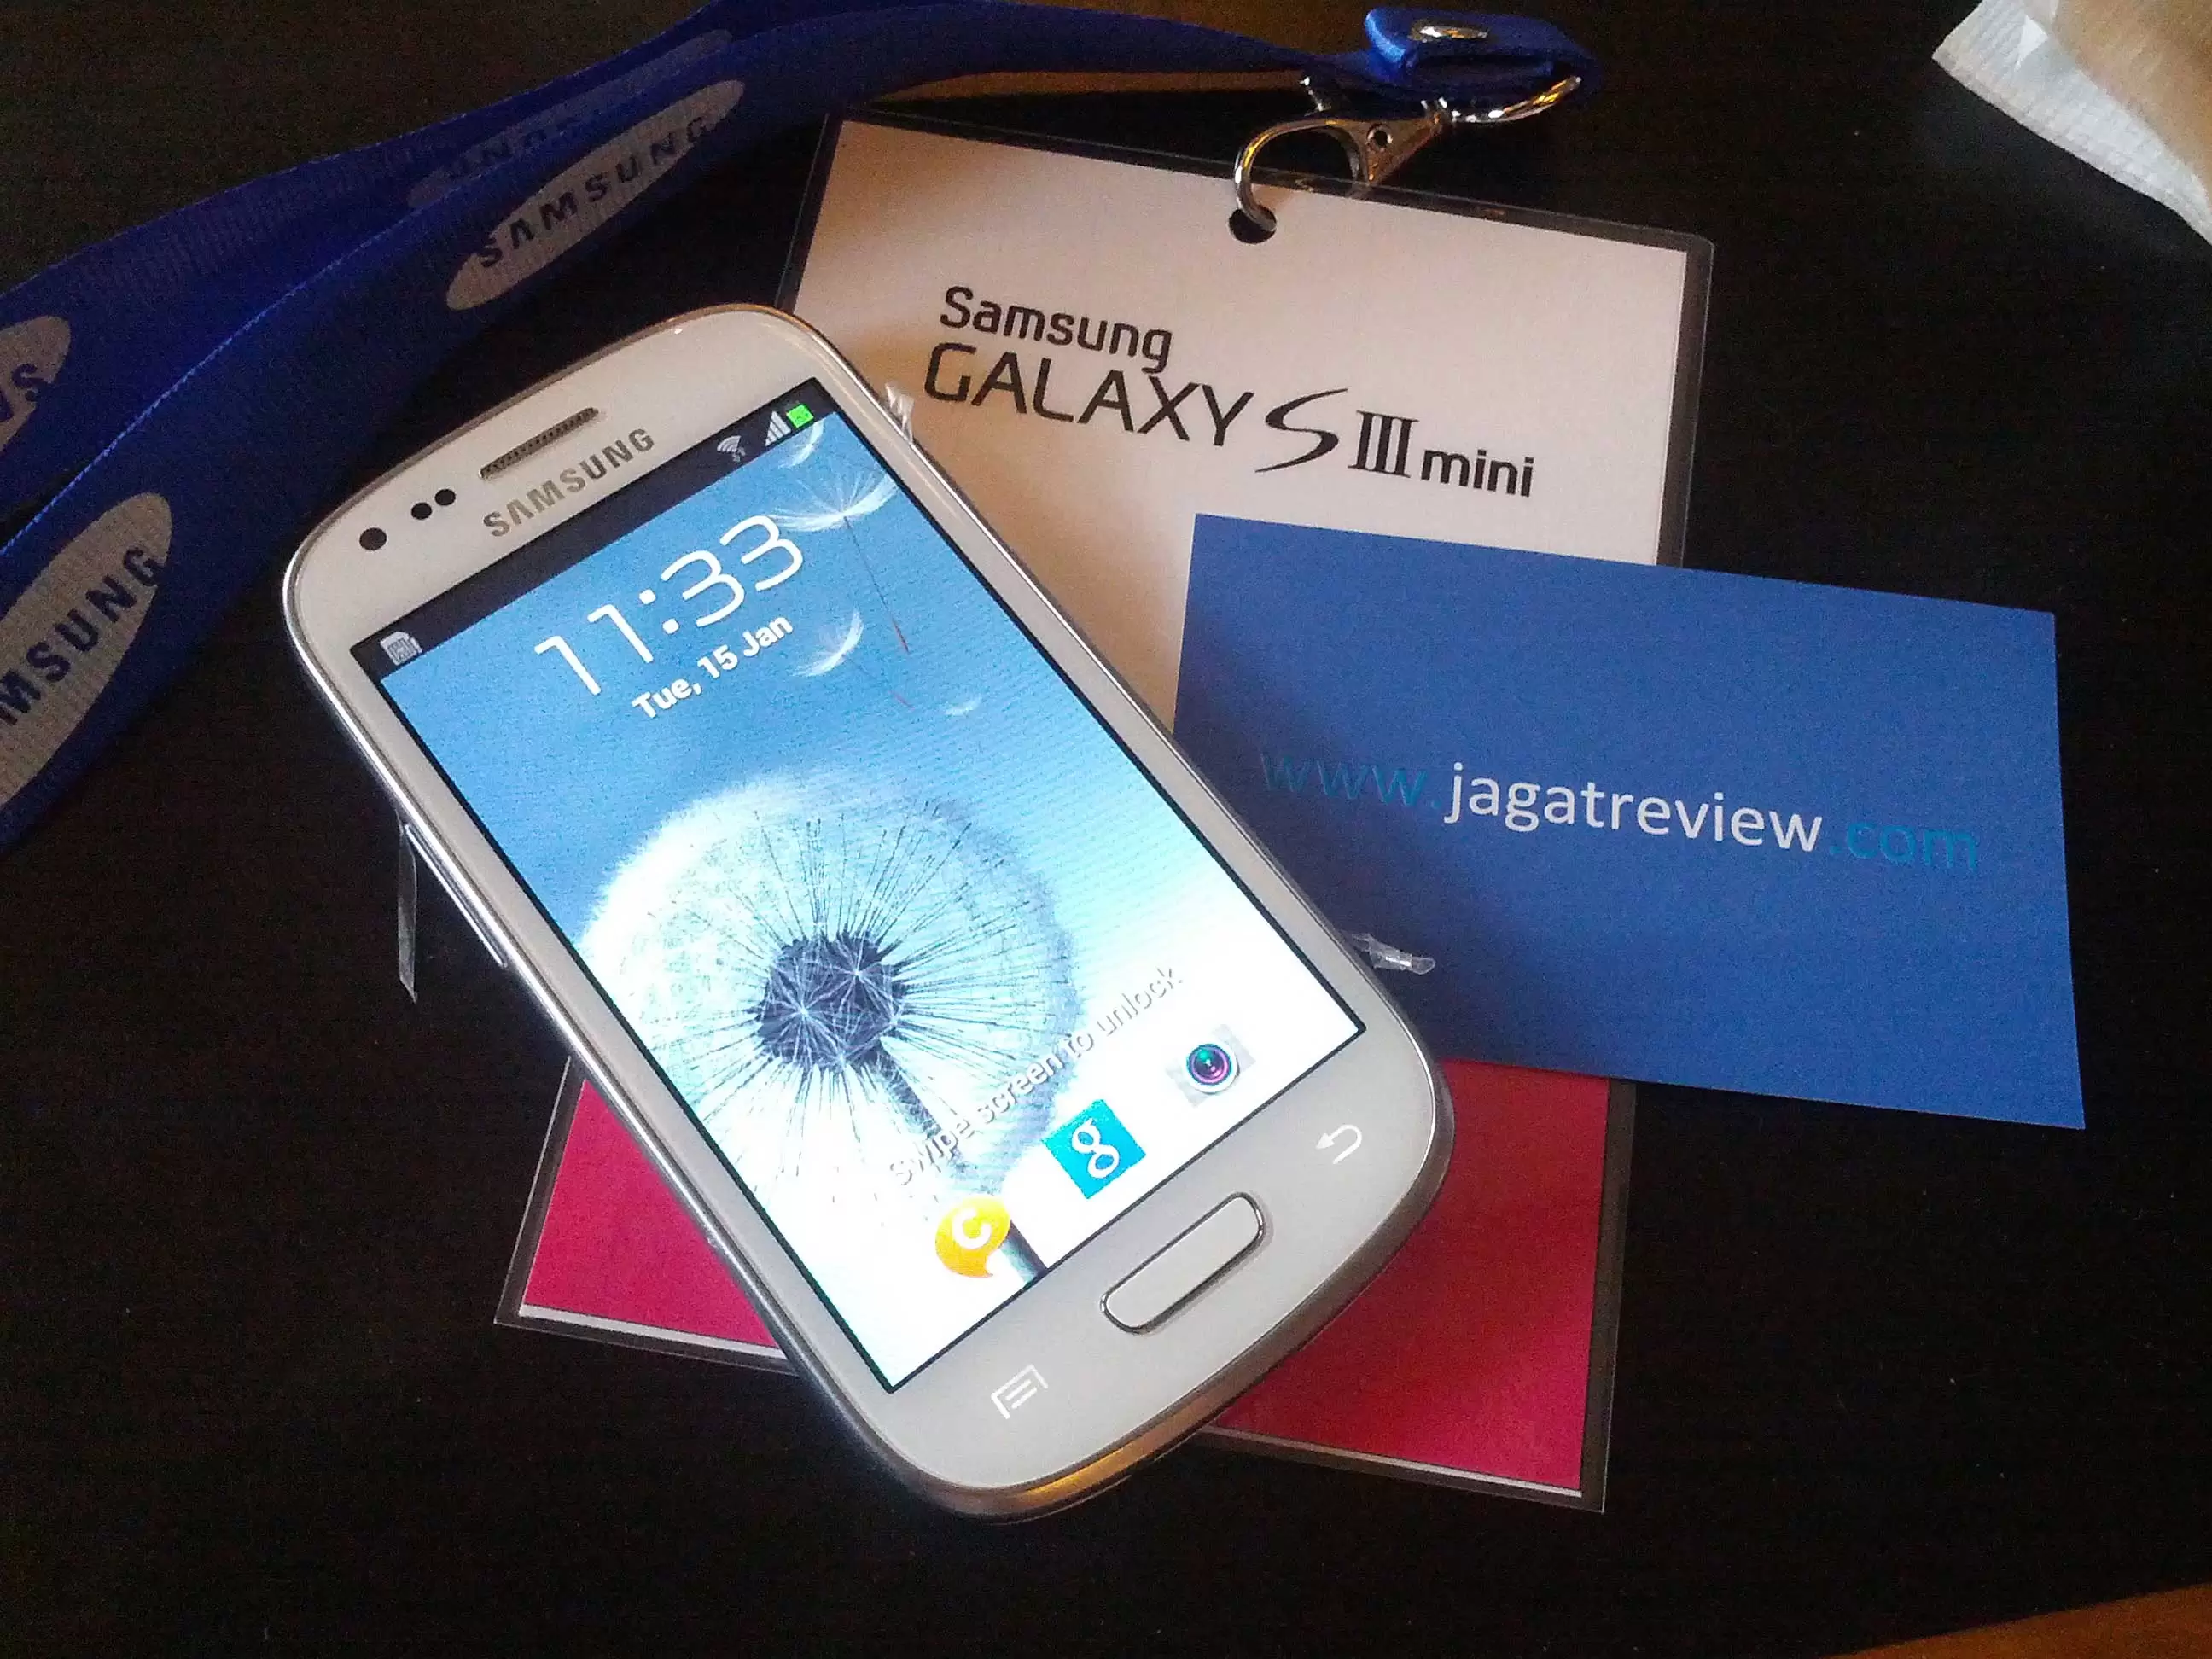 Harga Samsung Galaxy Mini Android 2013